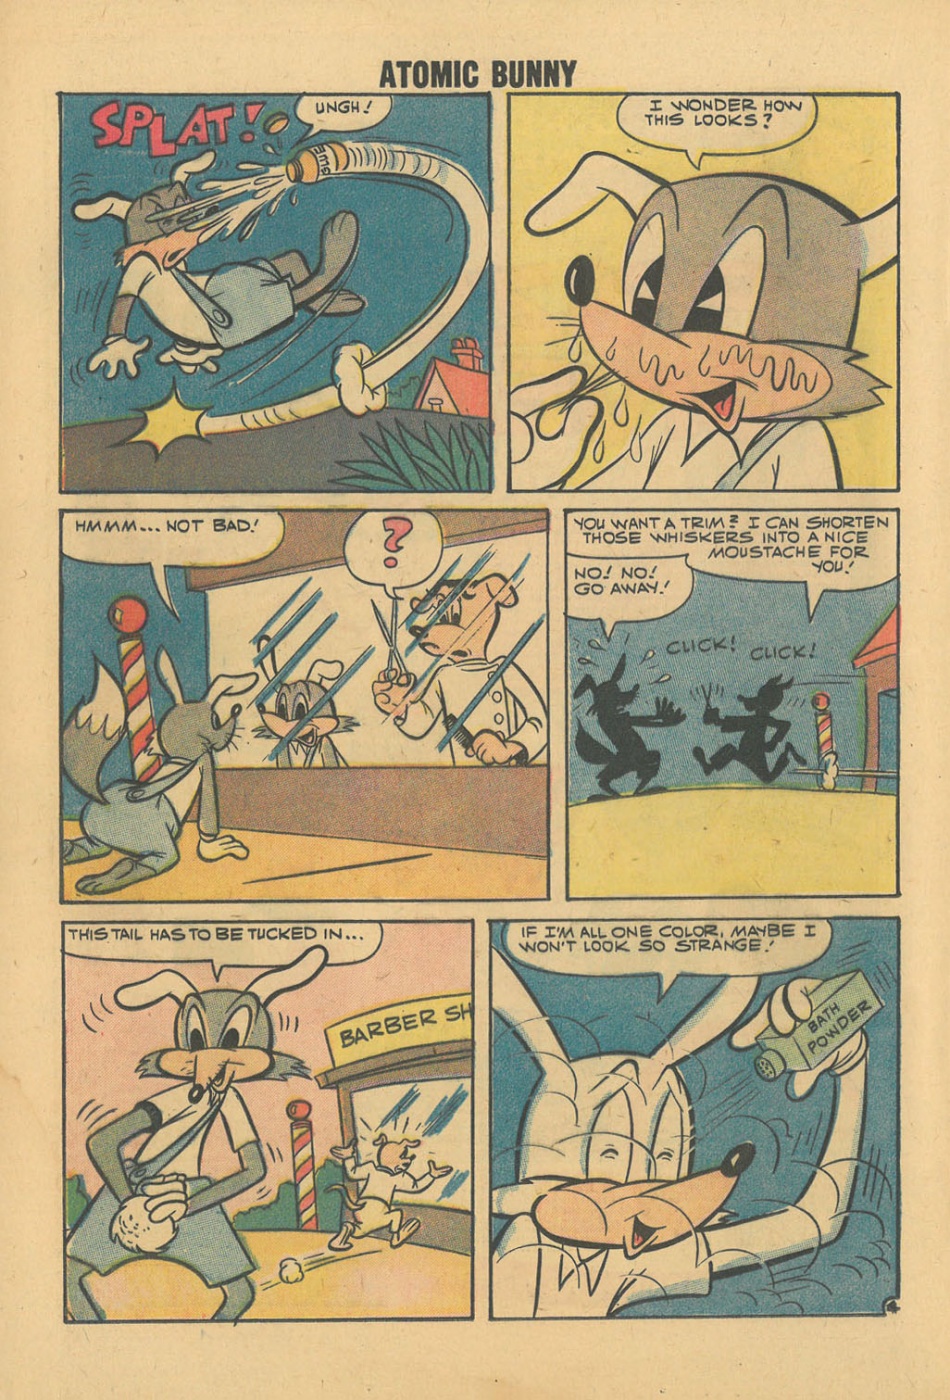 Atomic-Bunny-Comic-Strips (c) (16)